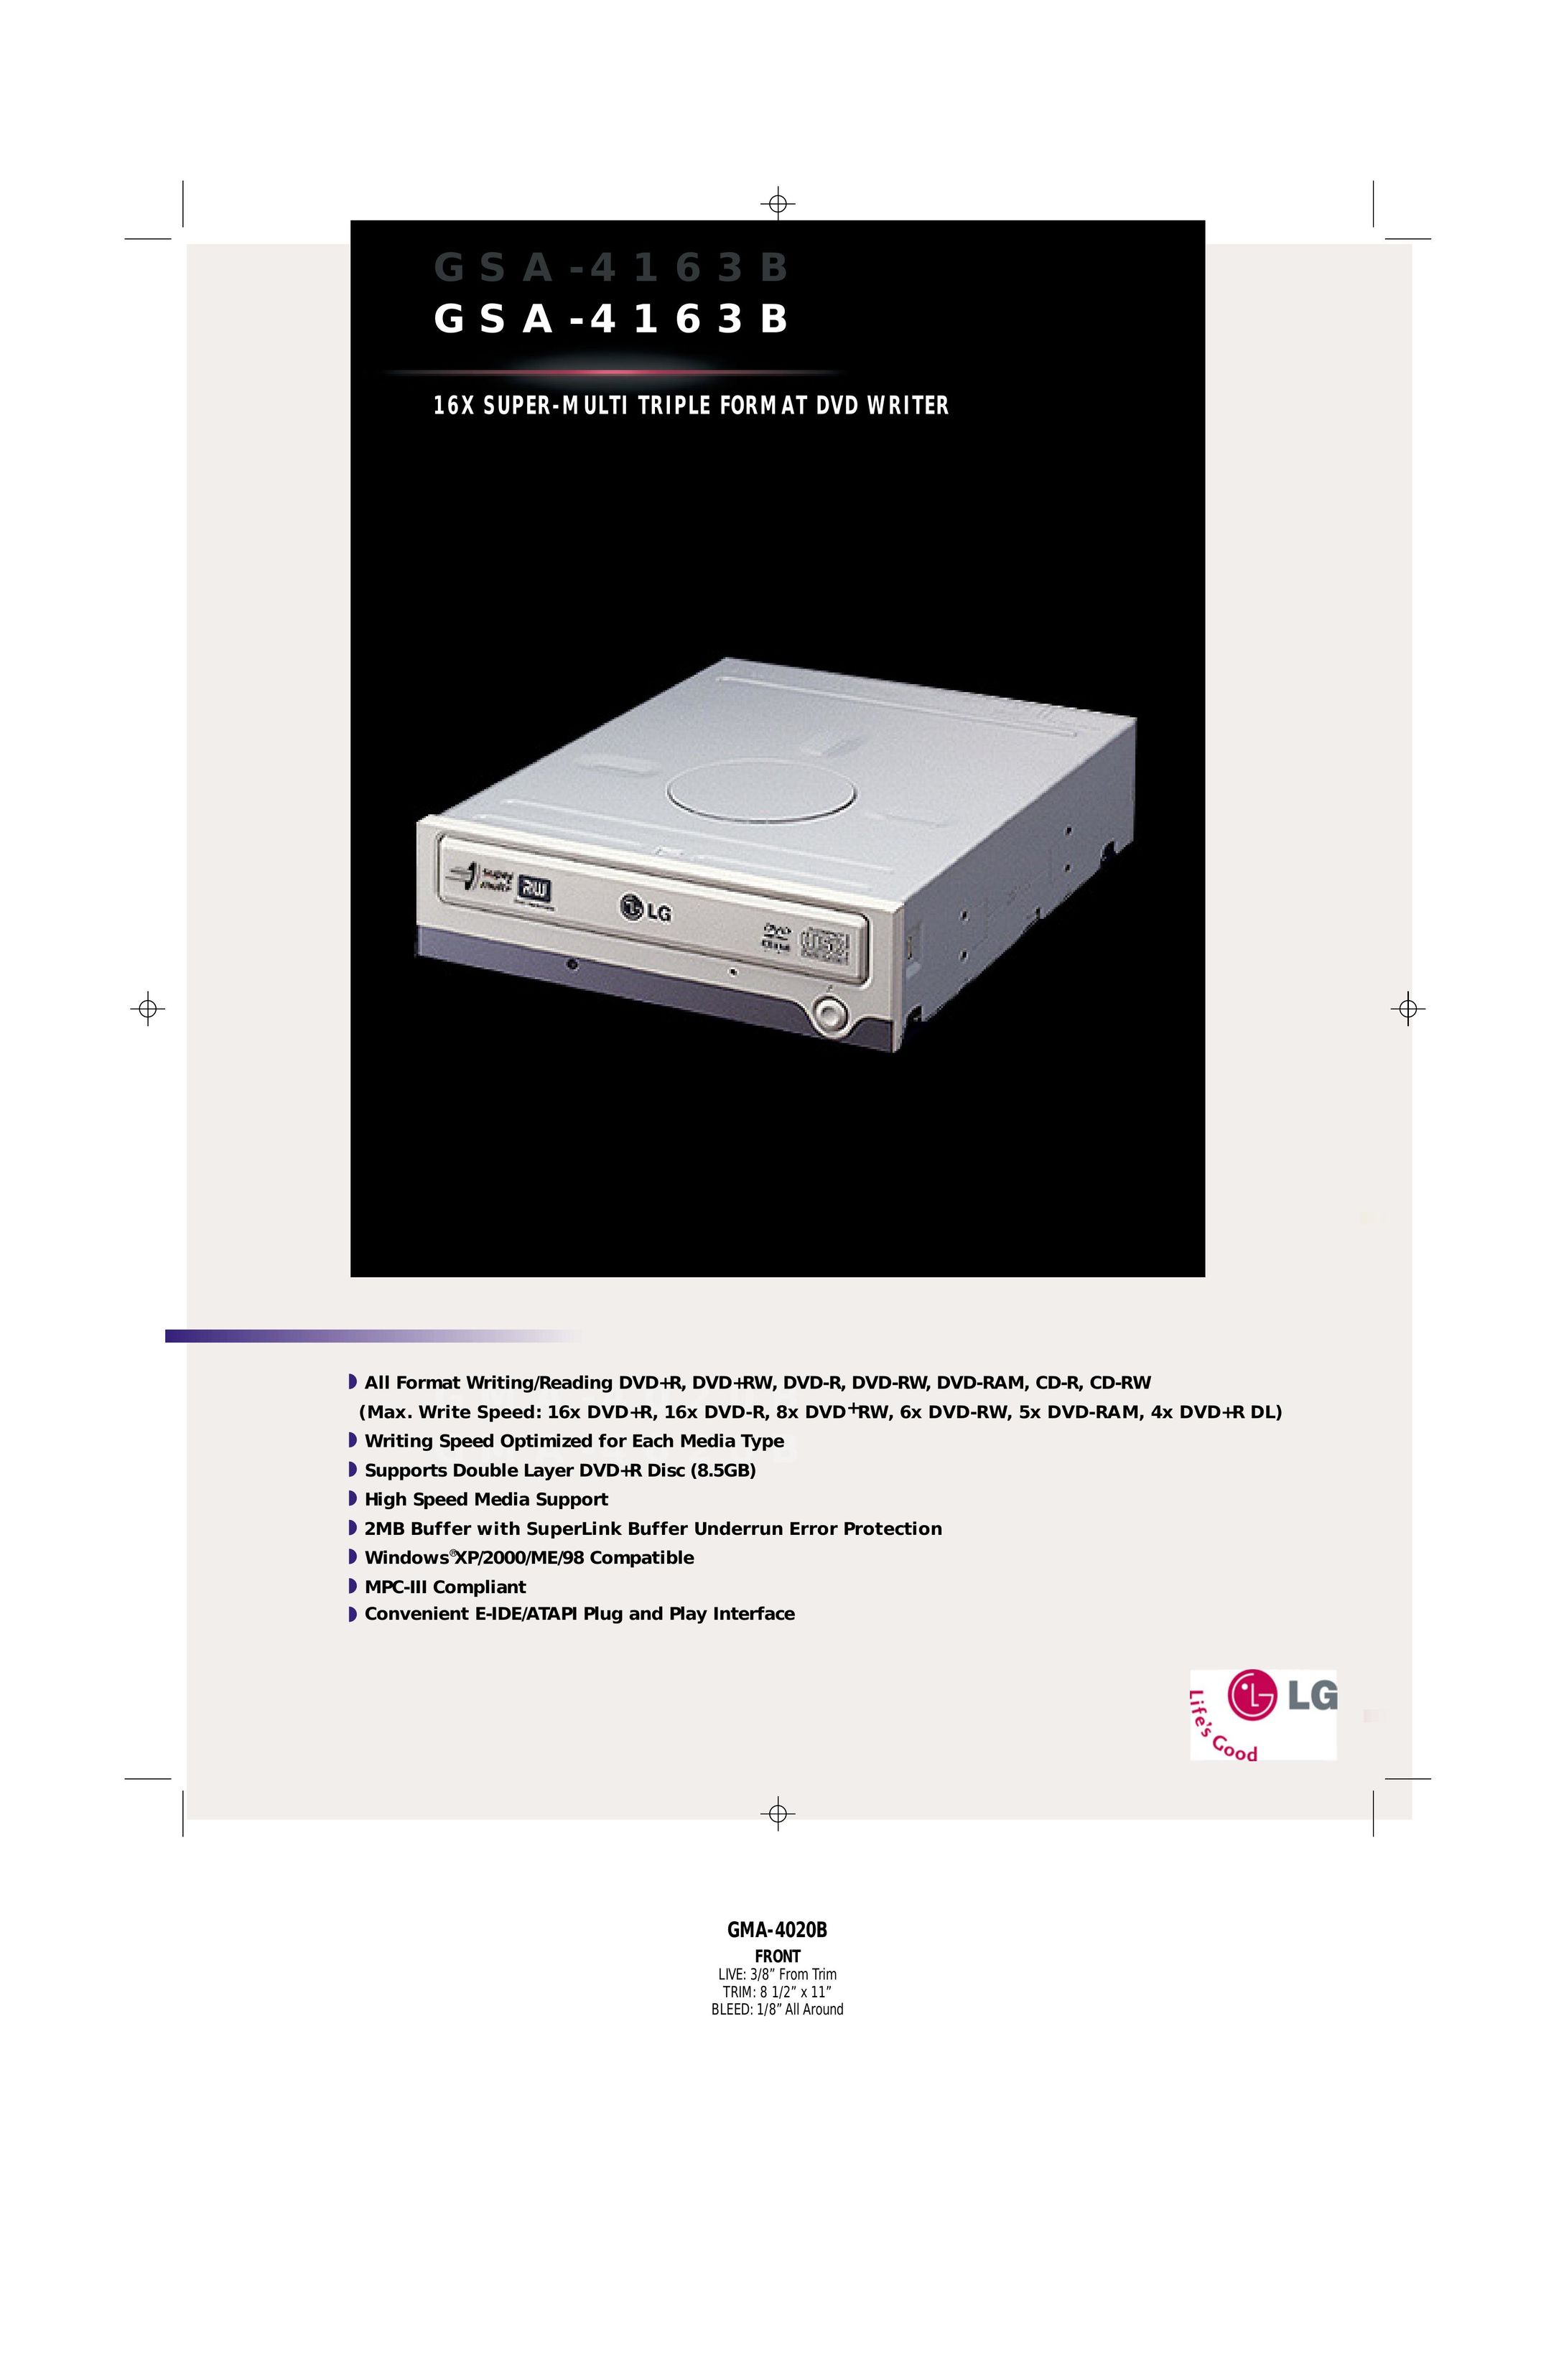 LG Electronics GMA-4020B Computer Drive User Manual